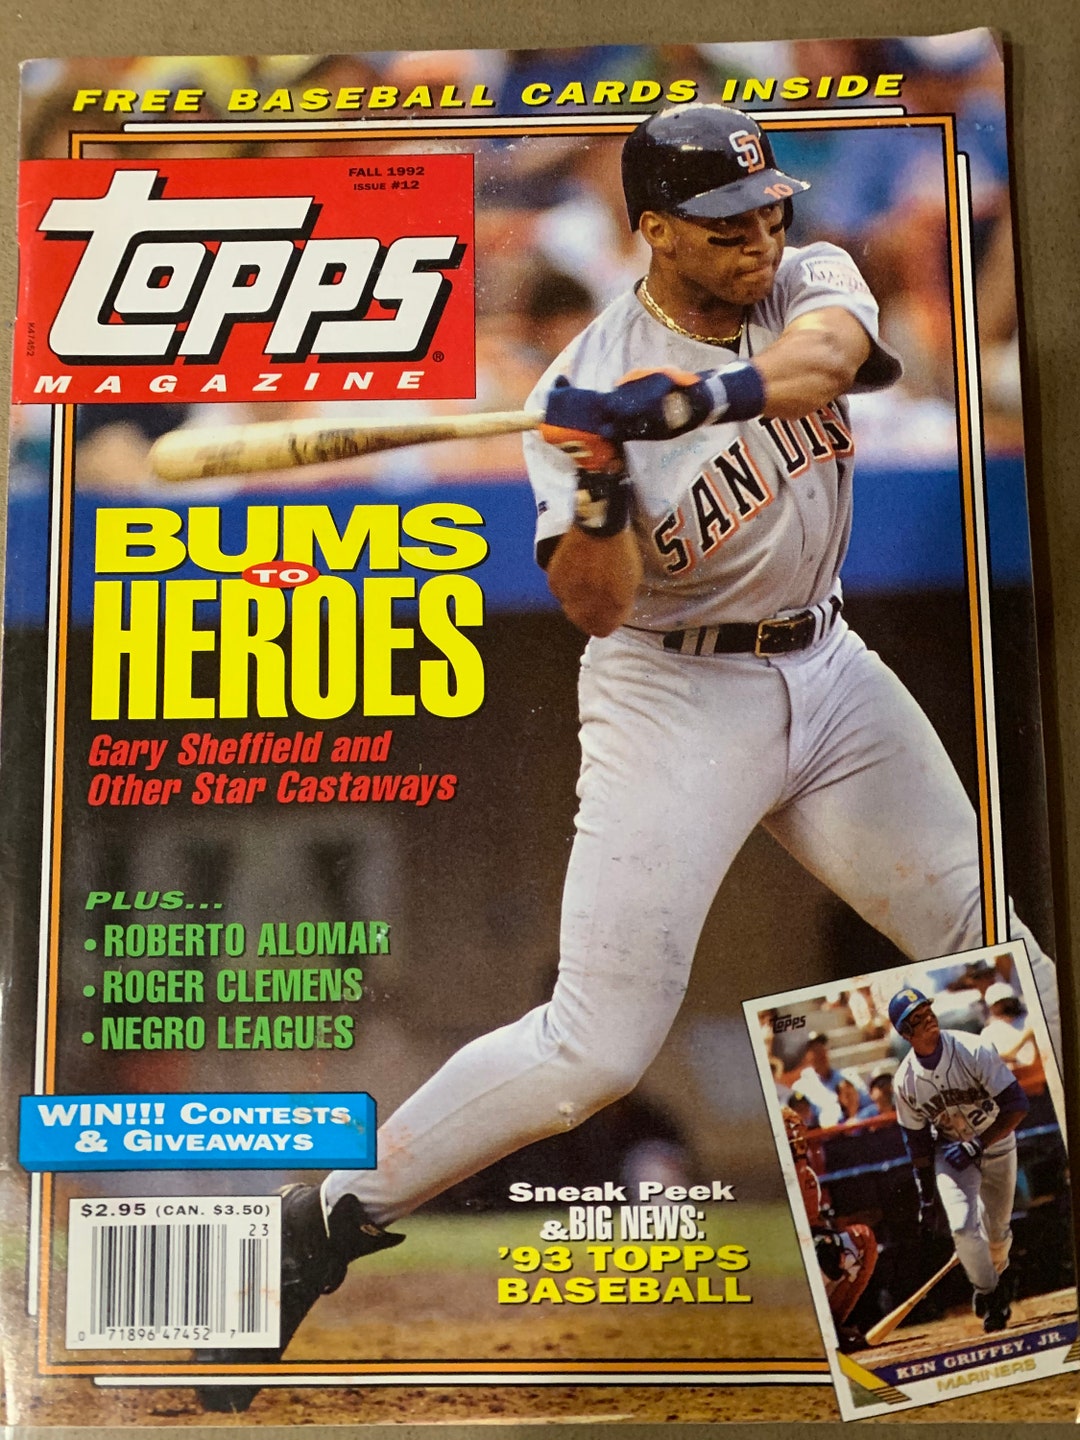 Topps Magazine Fall 1992 12 San Diego Padres Gary Sheffield 